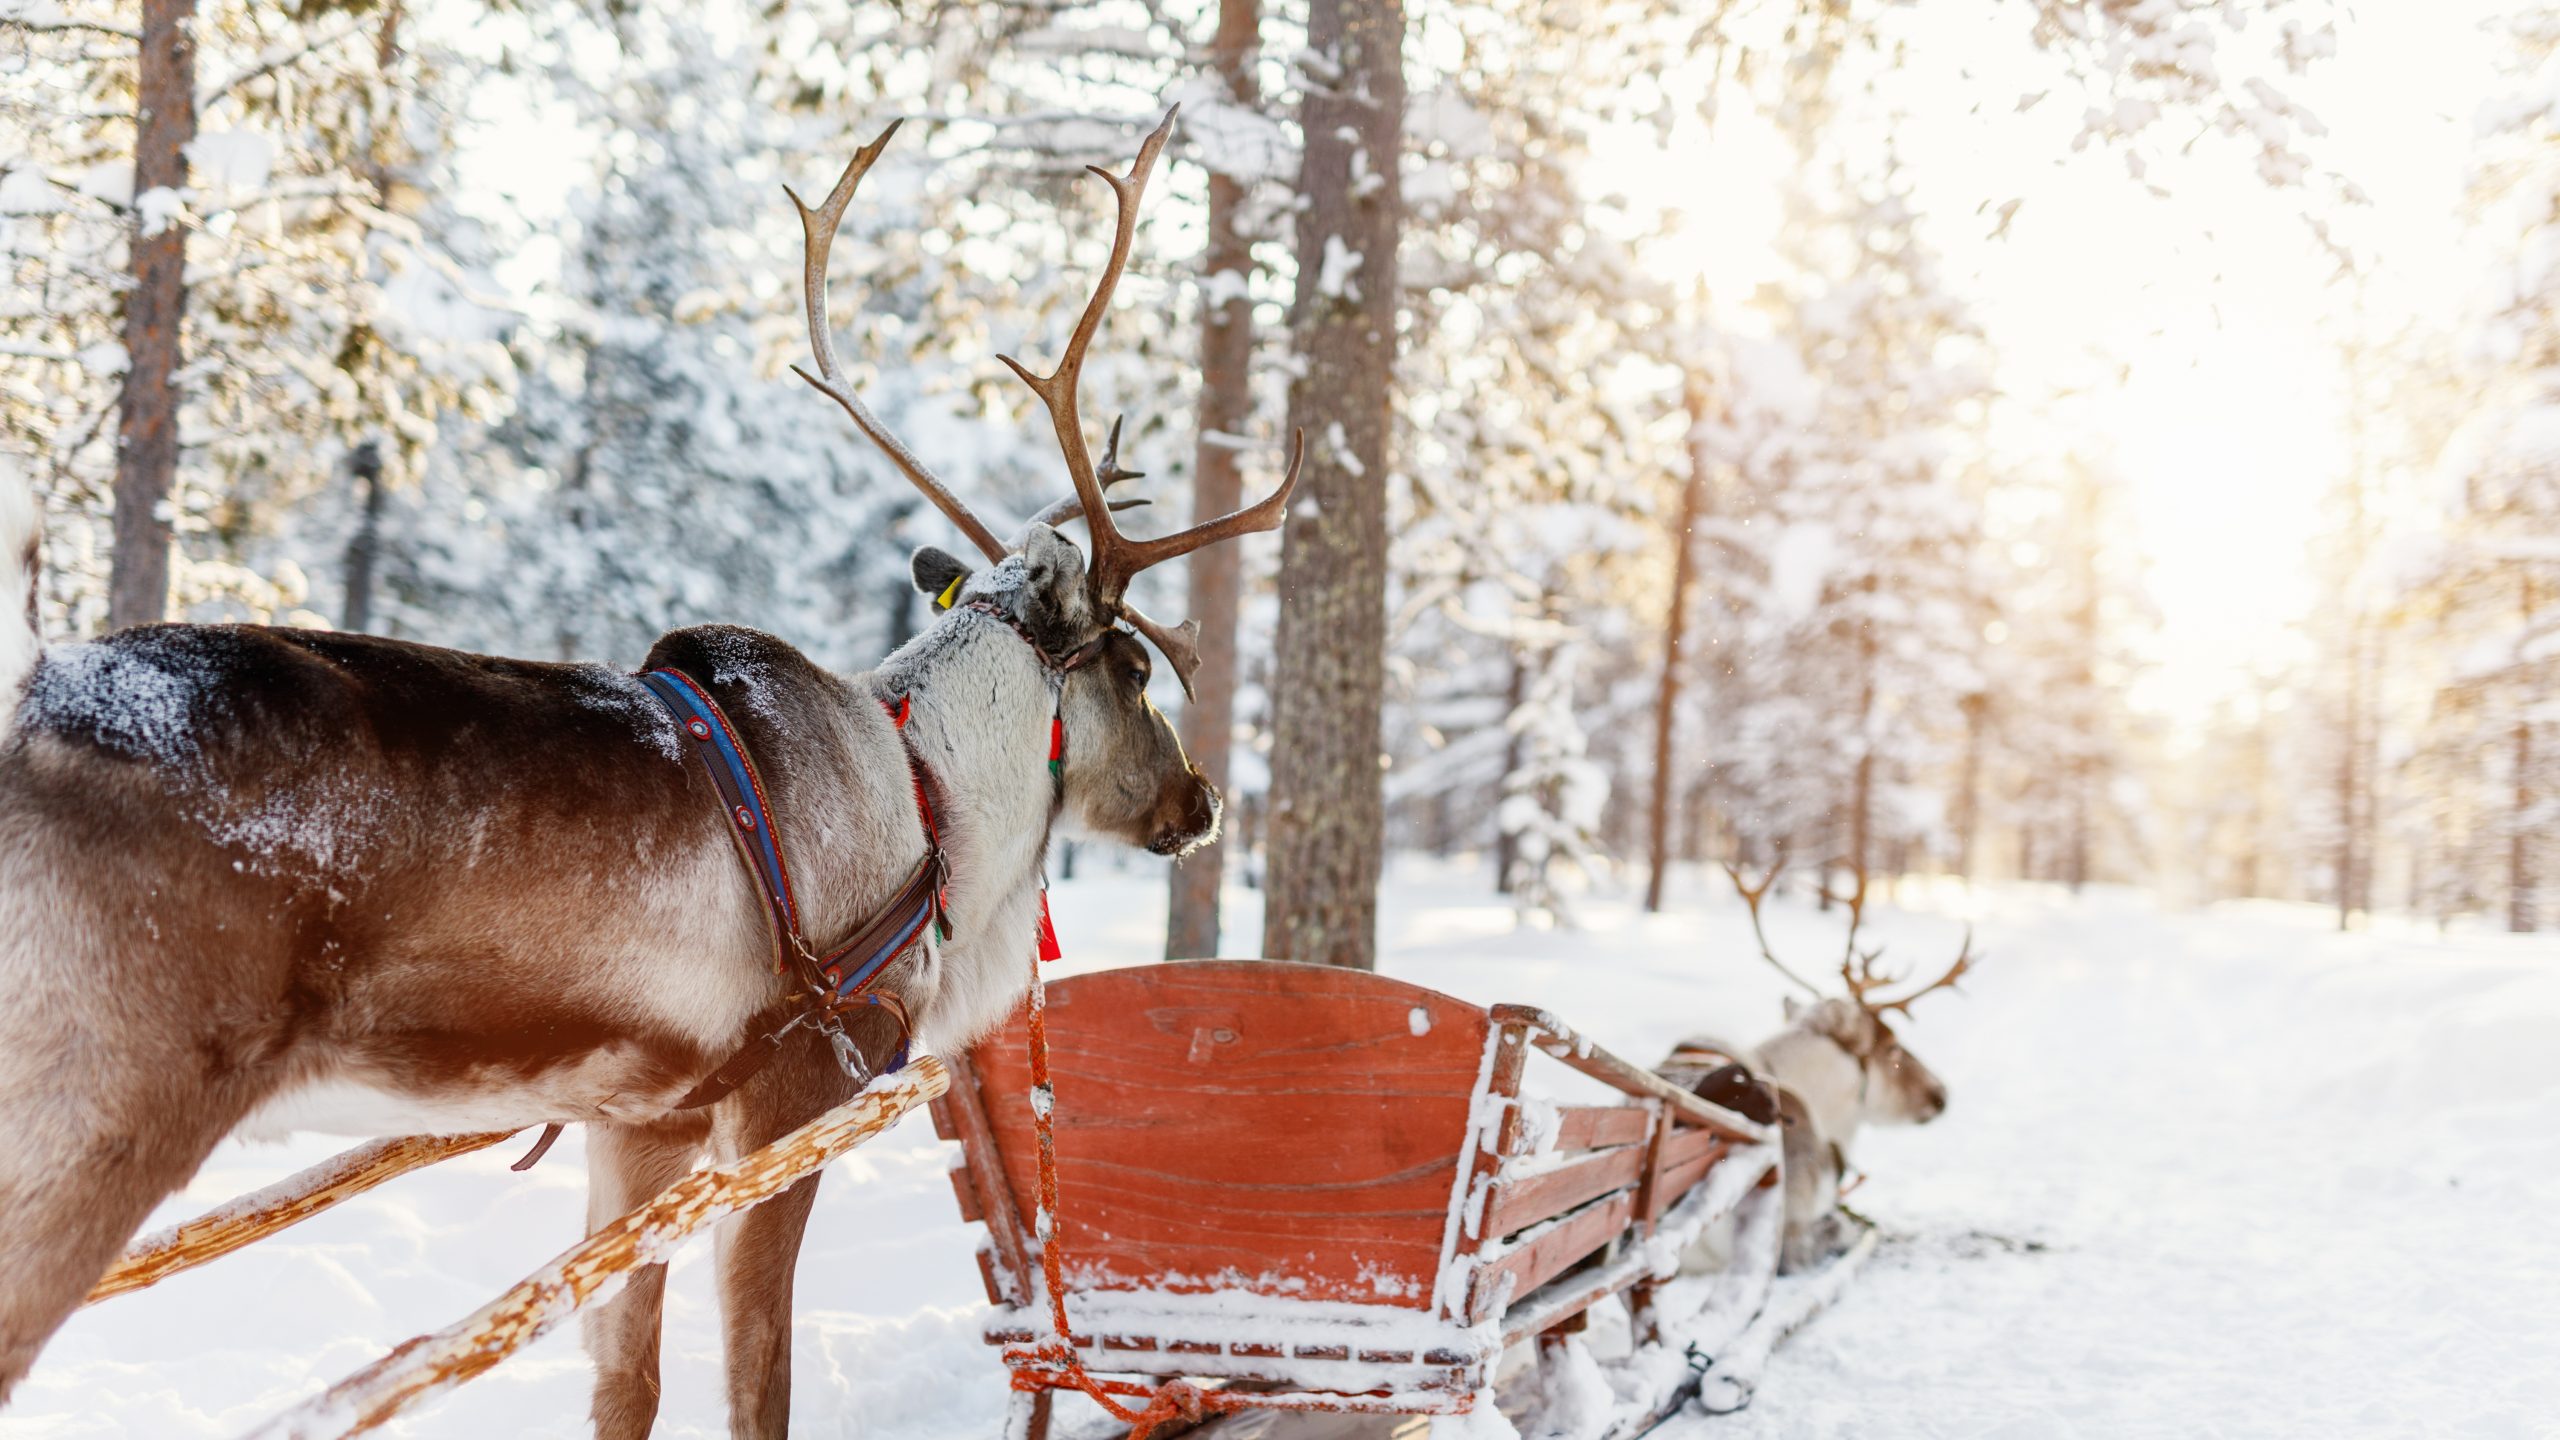 Finland Bus Charter in winter trip - Reindeer Safaris Adventure in Lapland